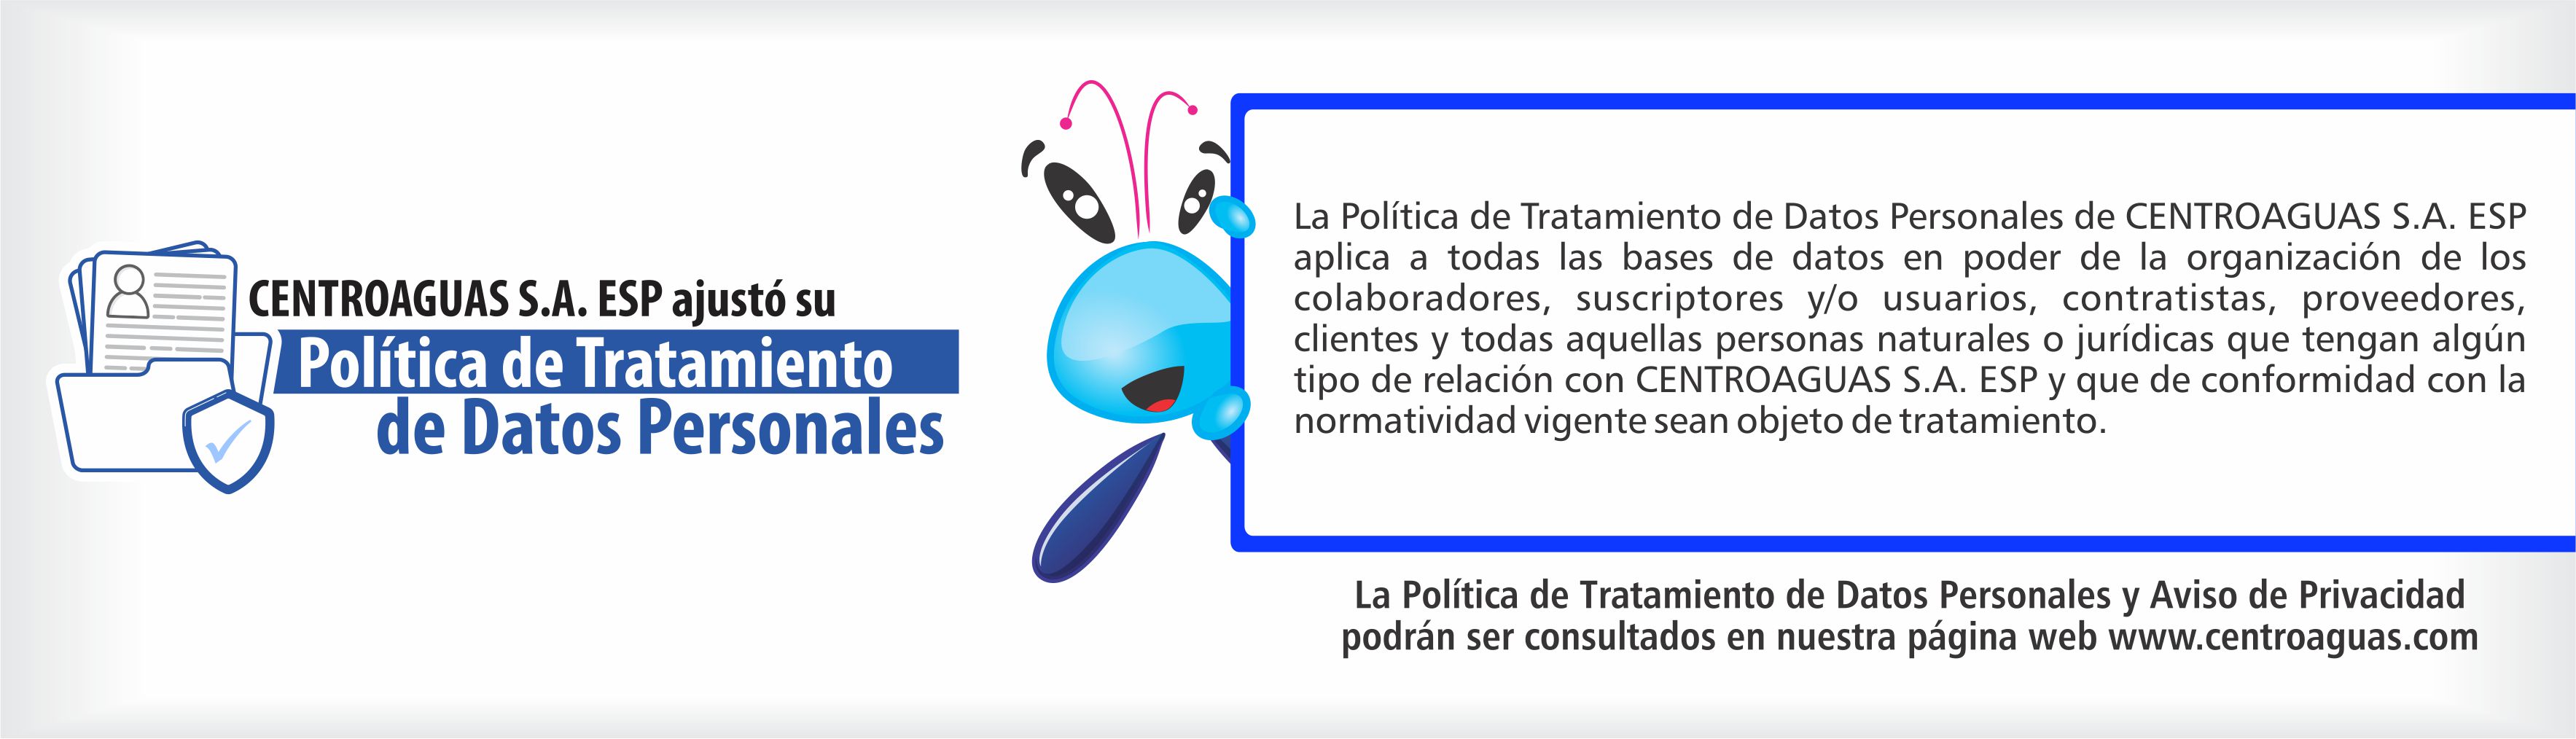 1A_A_Politica_tratamiento_Datos_Perso.jpg